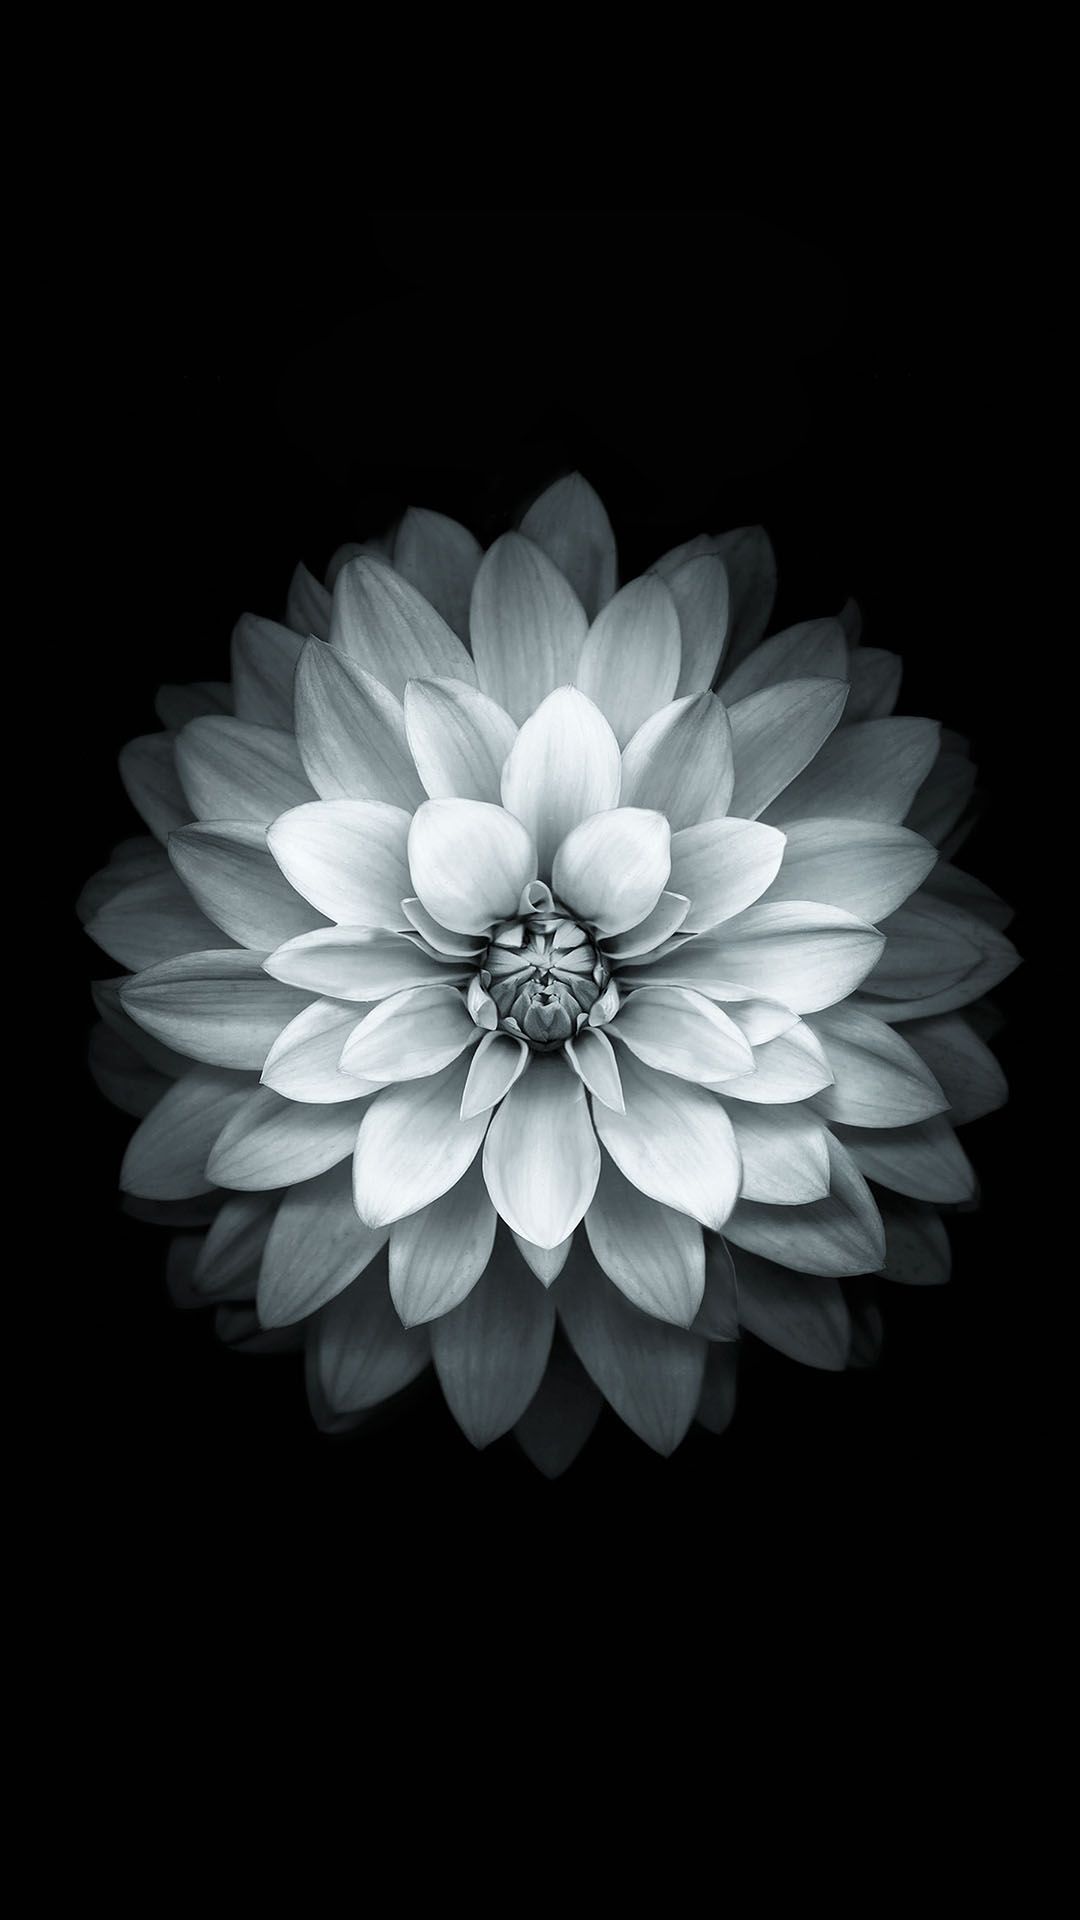 Black White Apple Lotus Flower Android Wallpaper. Retina